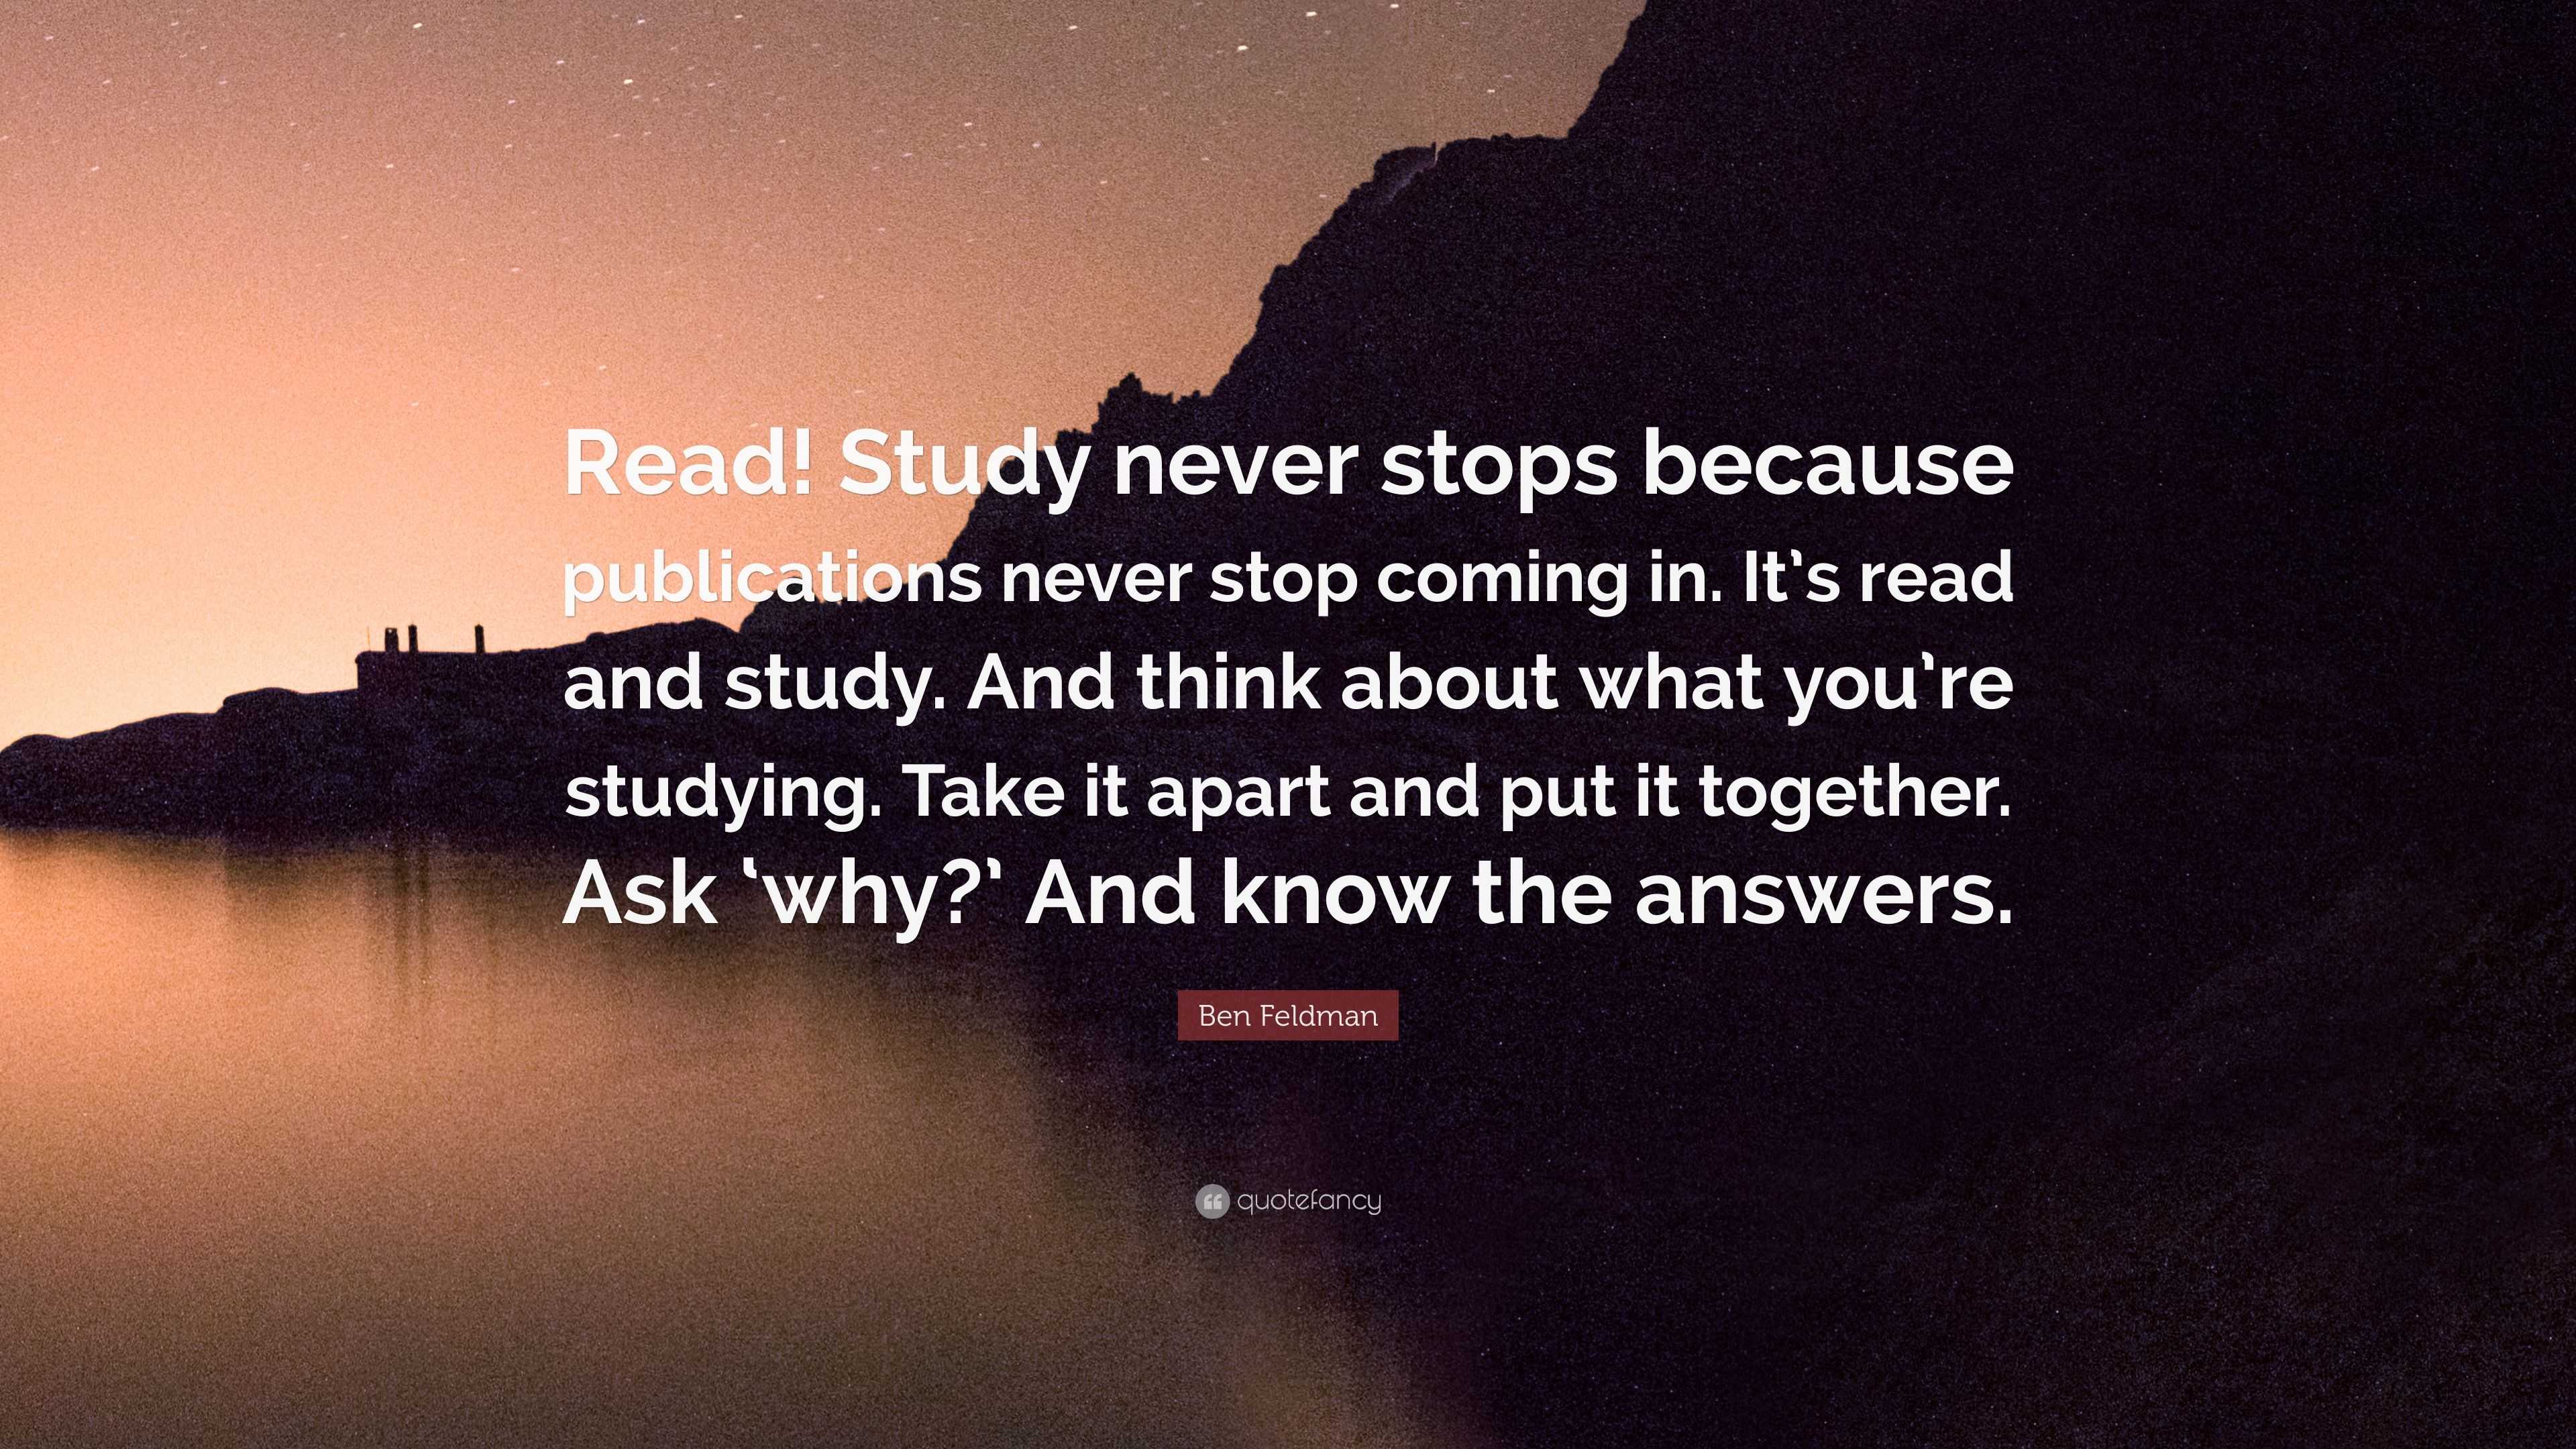 Ben Feldman Quote: “Read! Study never stops because publications never ...